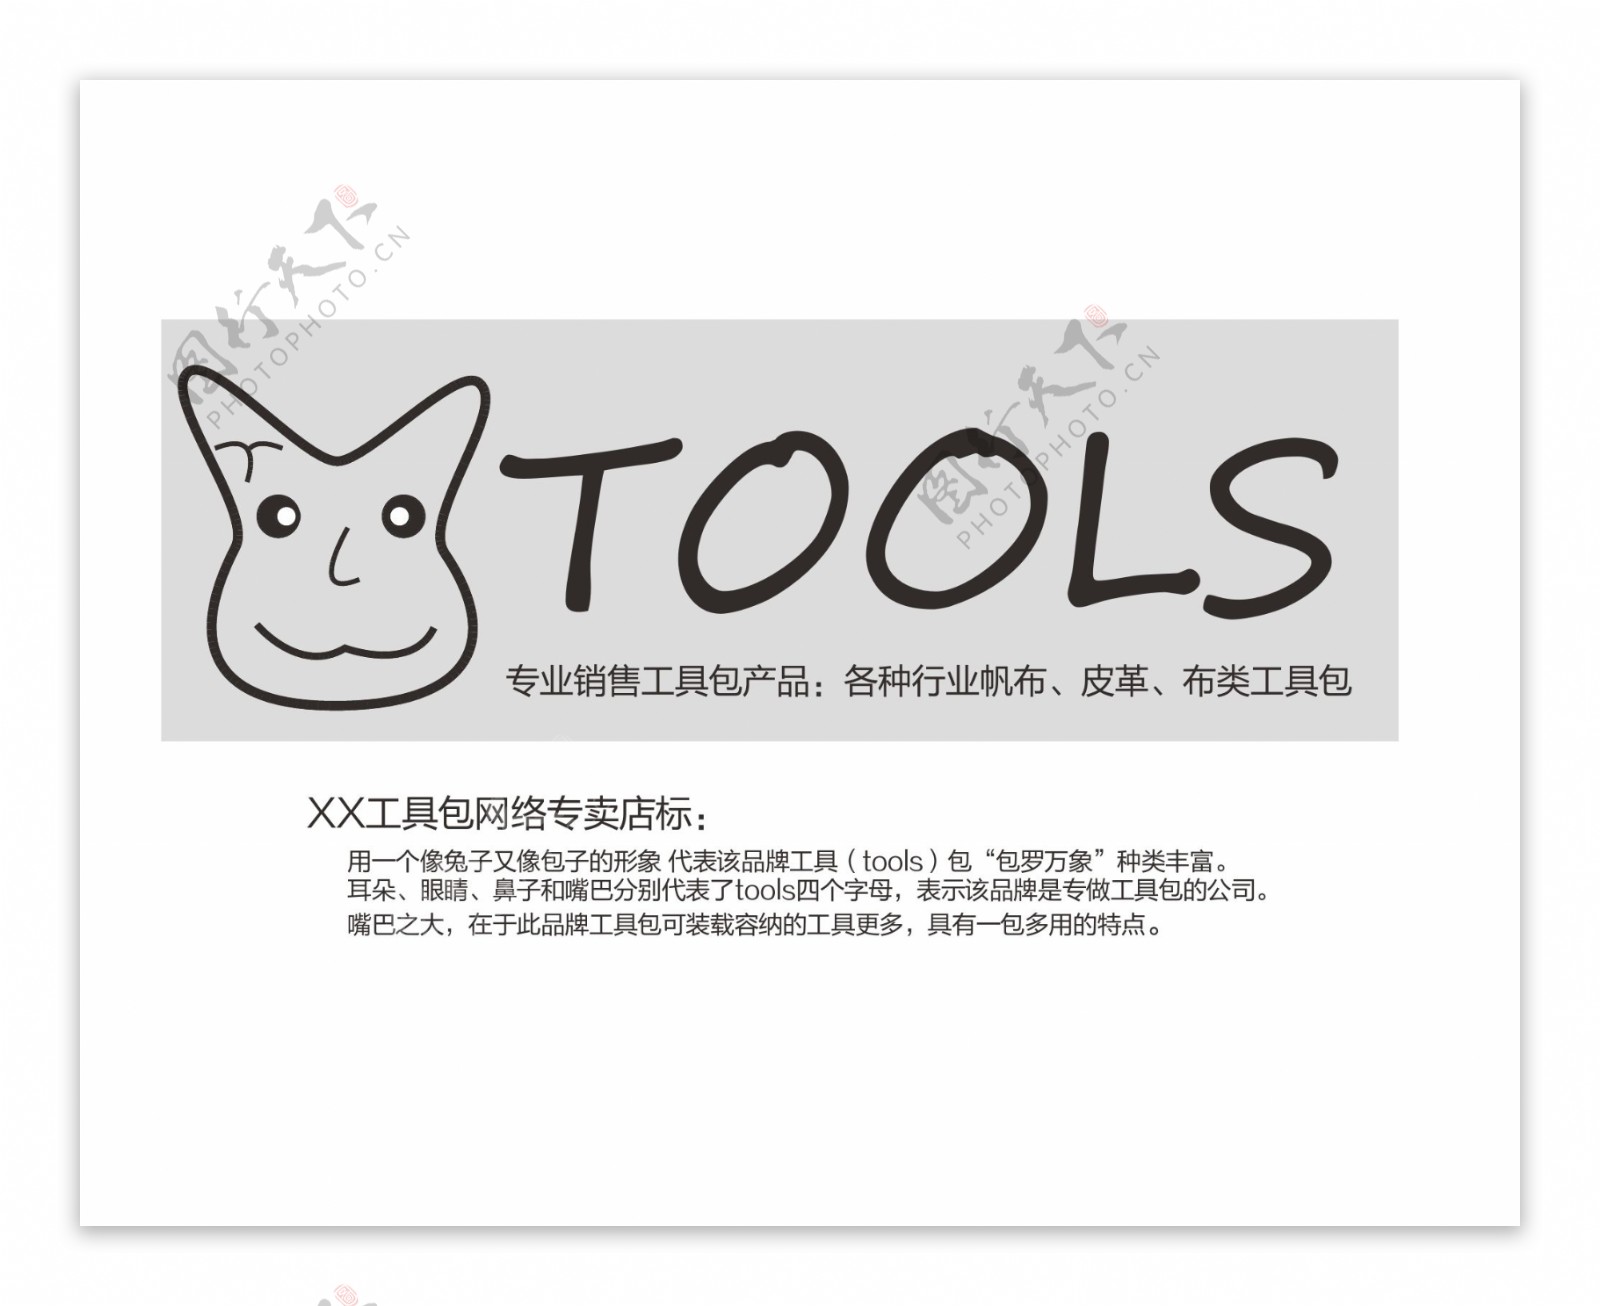 TOOLS工具创意logo